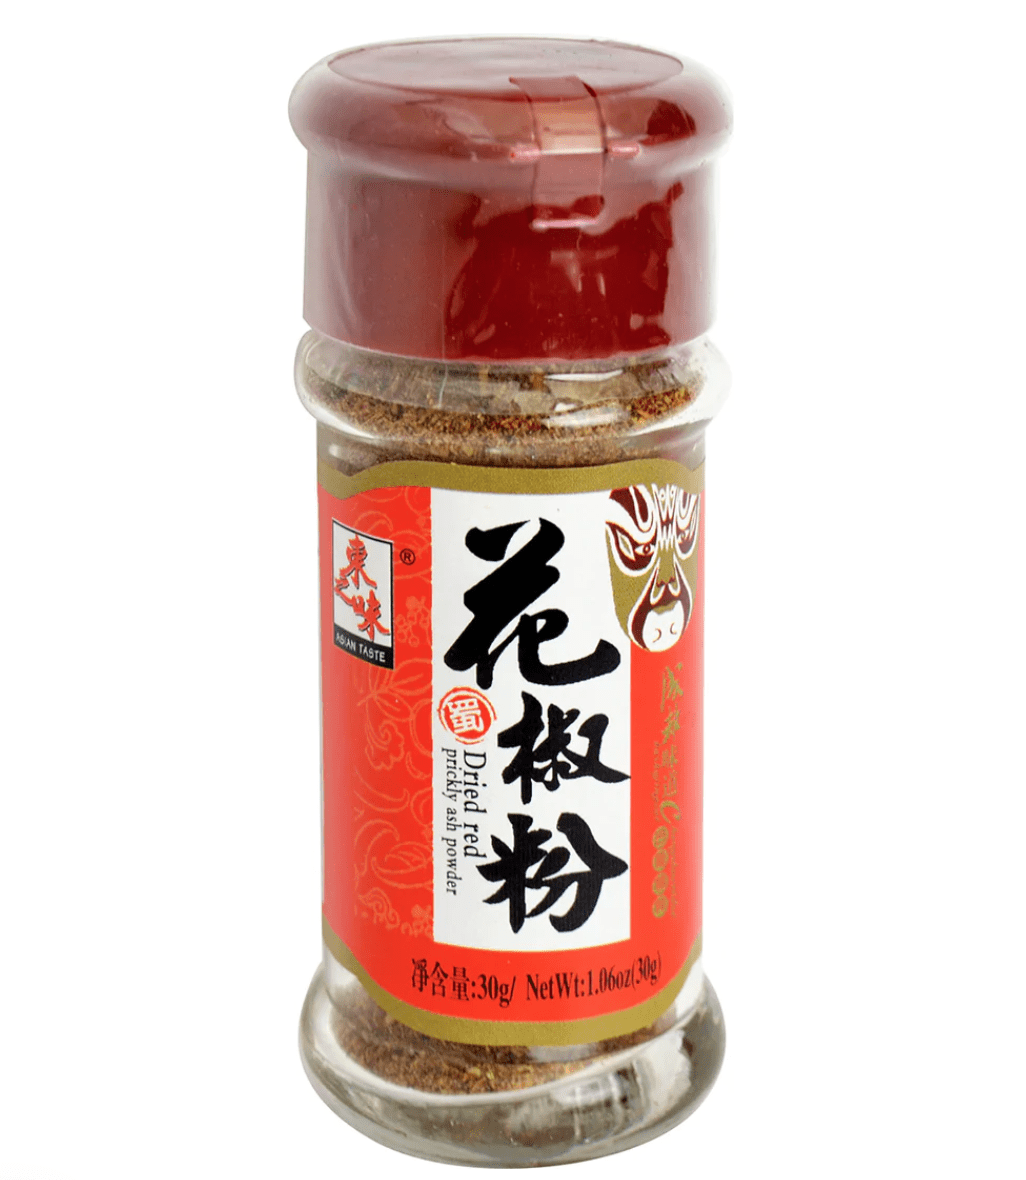 Sichuan peppercorn powder